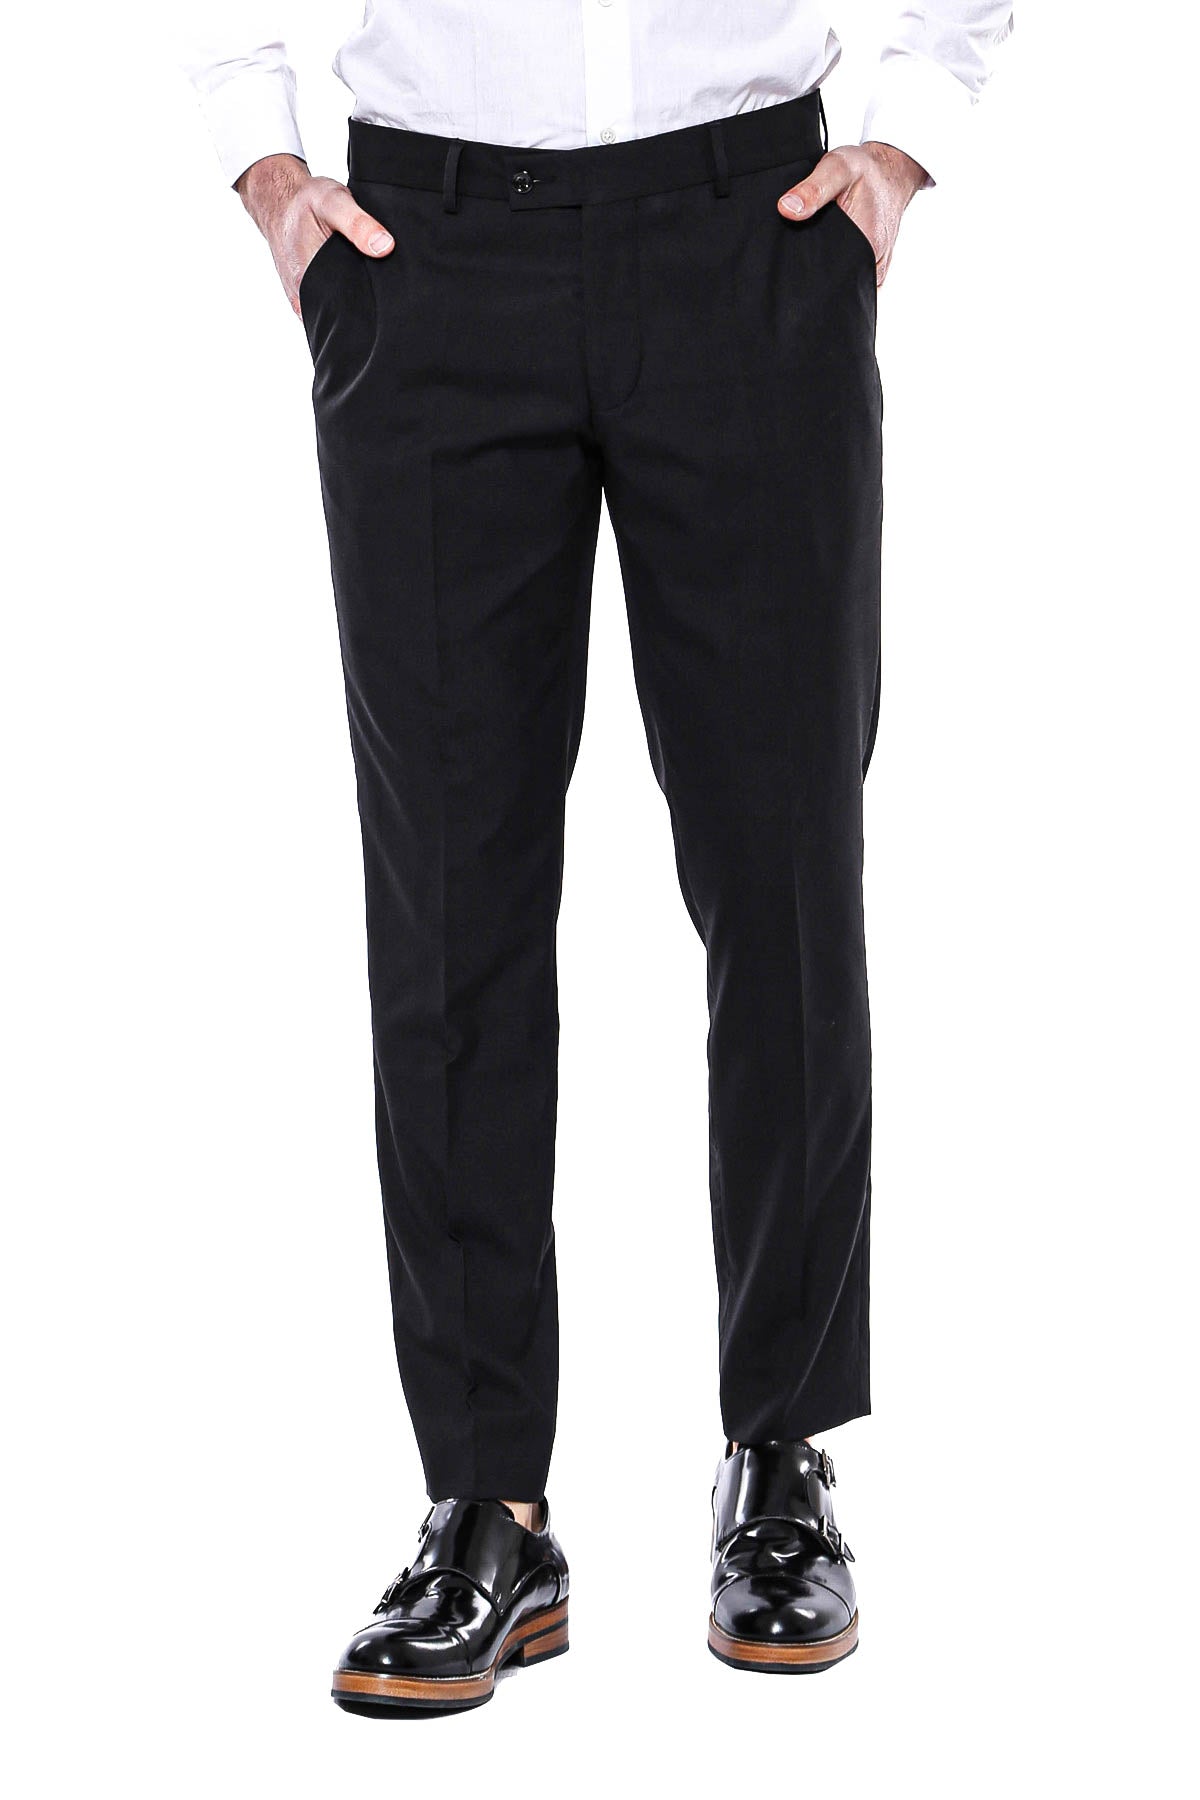 Haggar J.M. Haggar™ Sharkskin Ultra Slim Fit Flat Front Pant | All Sale|  Men's Wearhouse